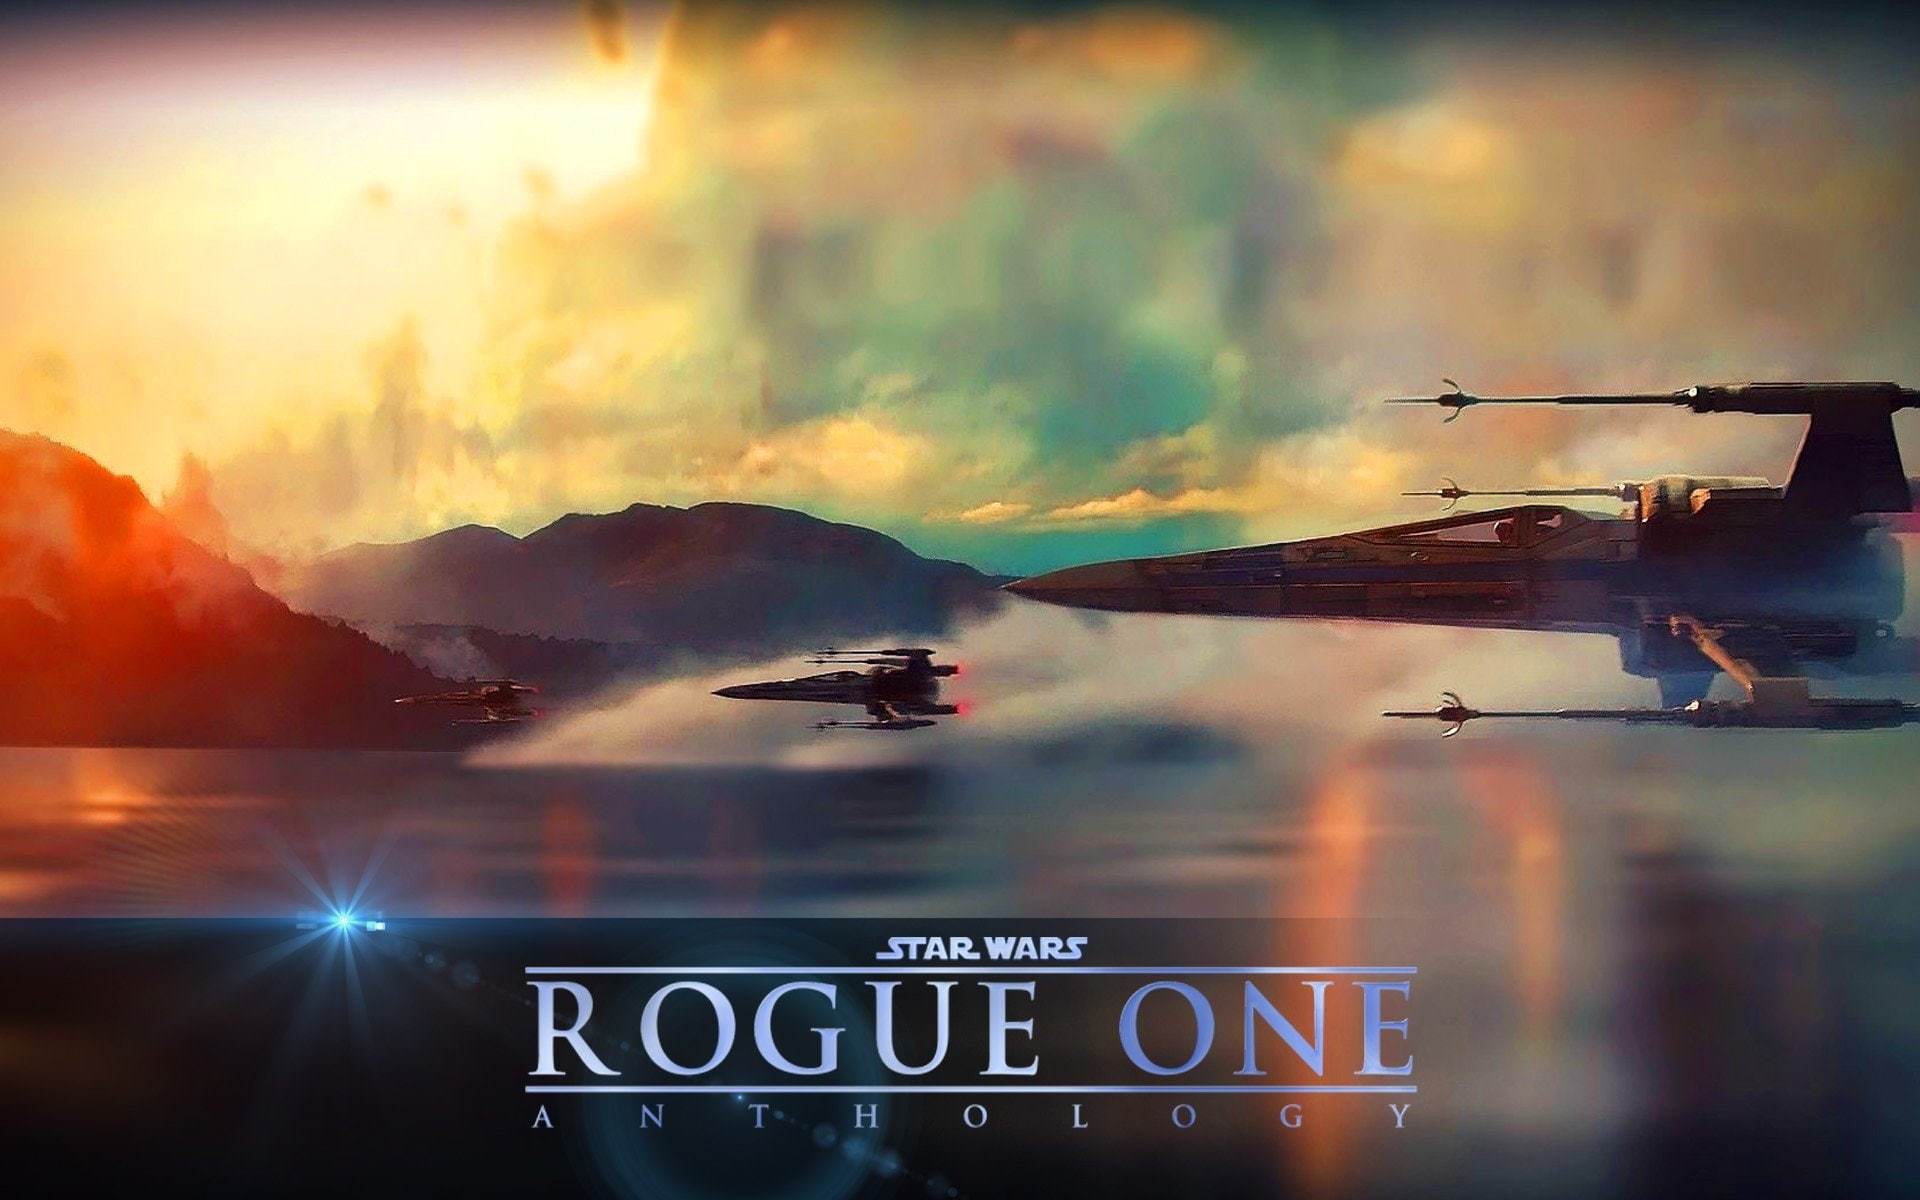 Star Wars, Rogue One: A Star Wars Story, transportation, sky